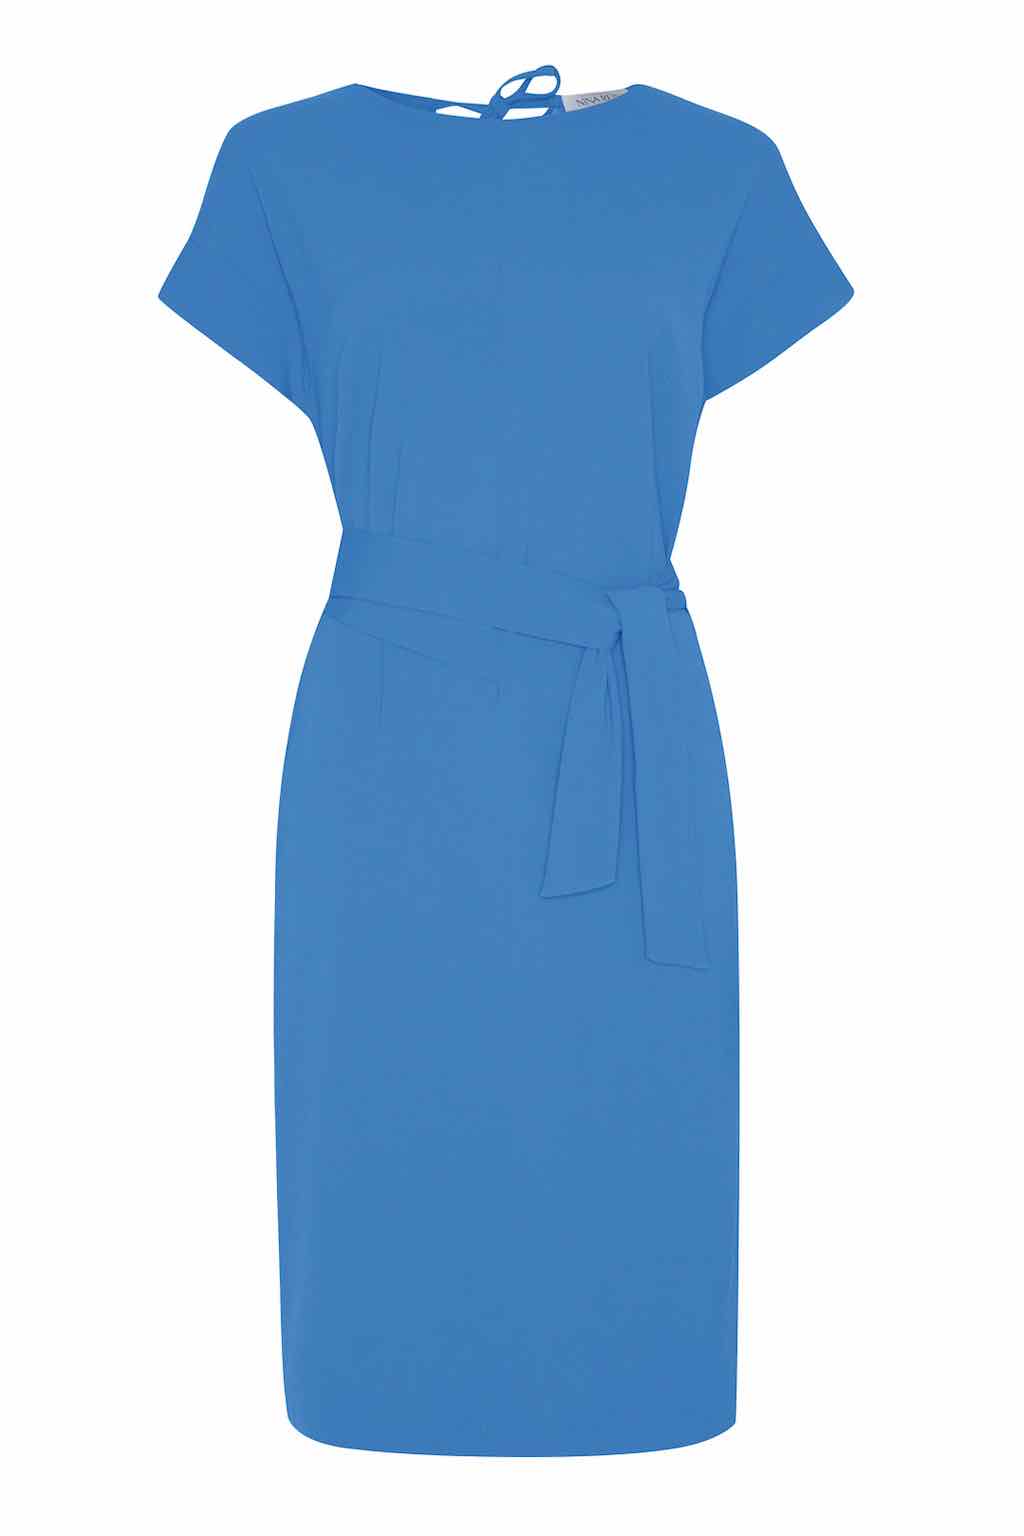 blaues Kleid Damen knielang mit Bindegürtel